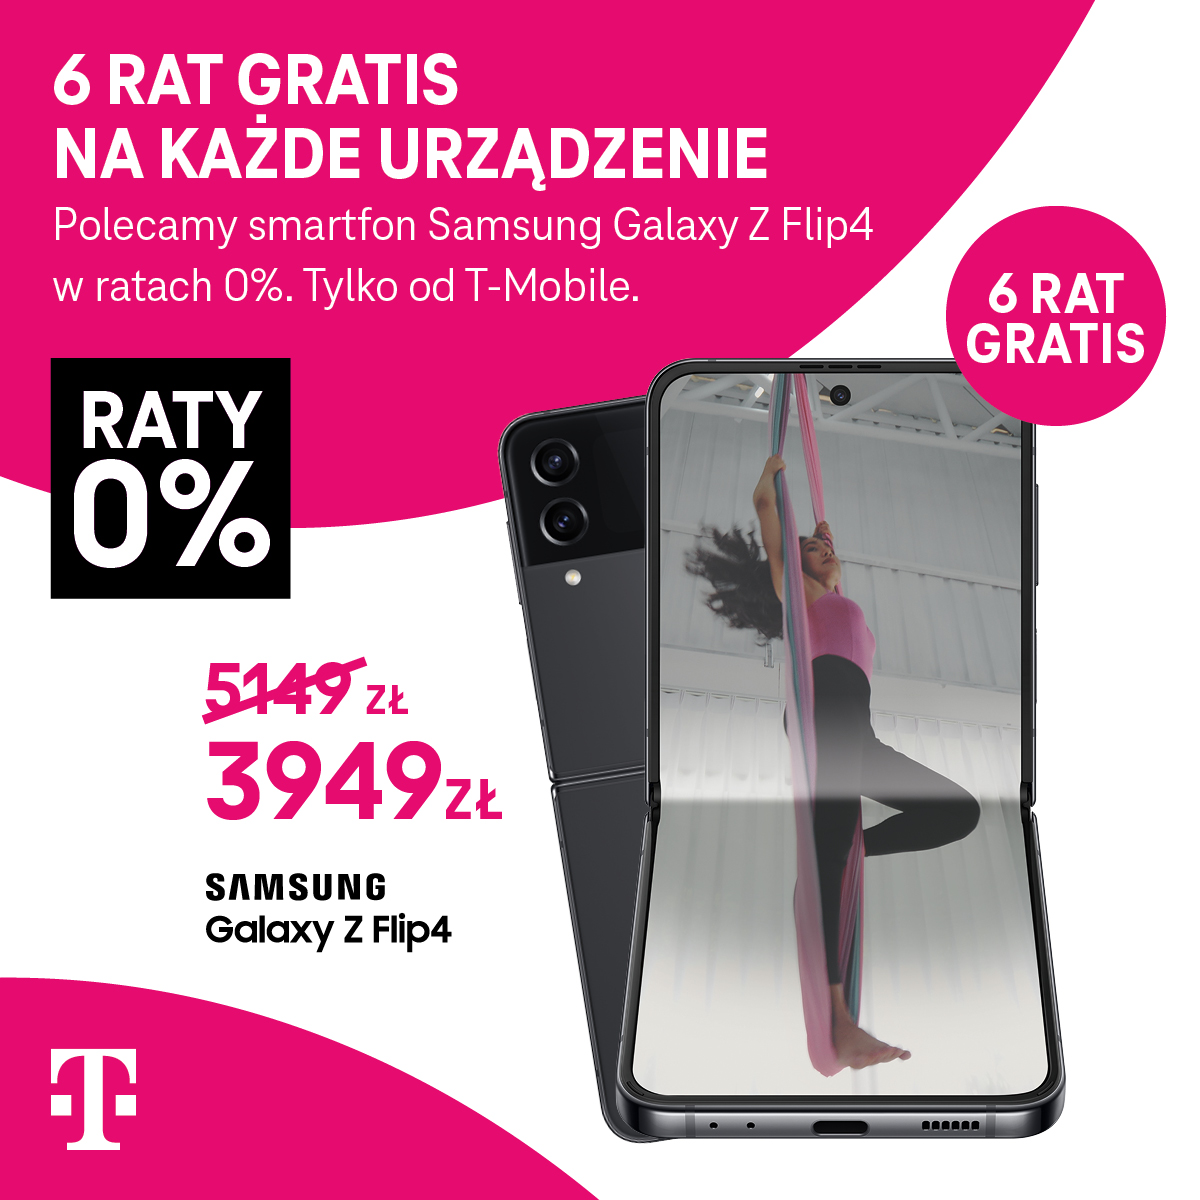 T-Mobile, T-Mobile 6 rat gratis!